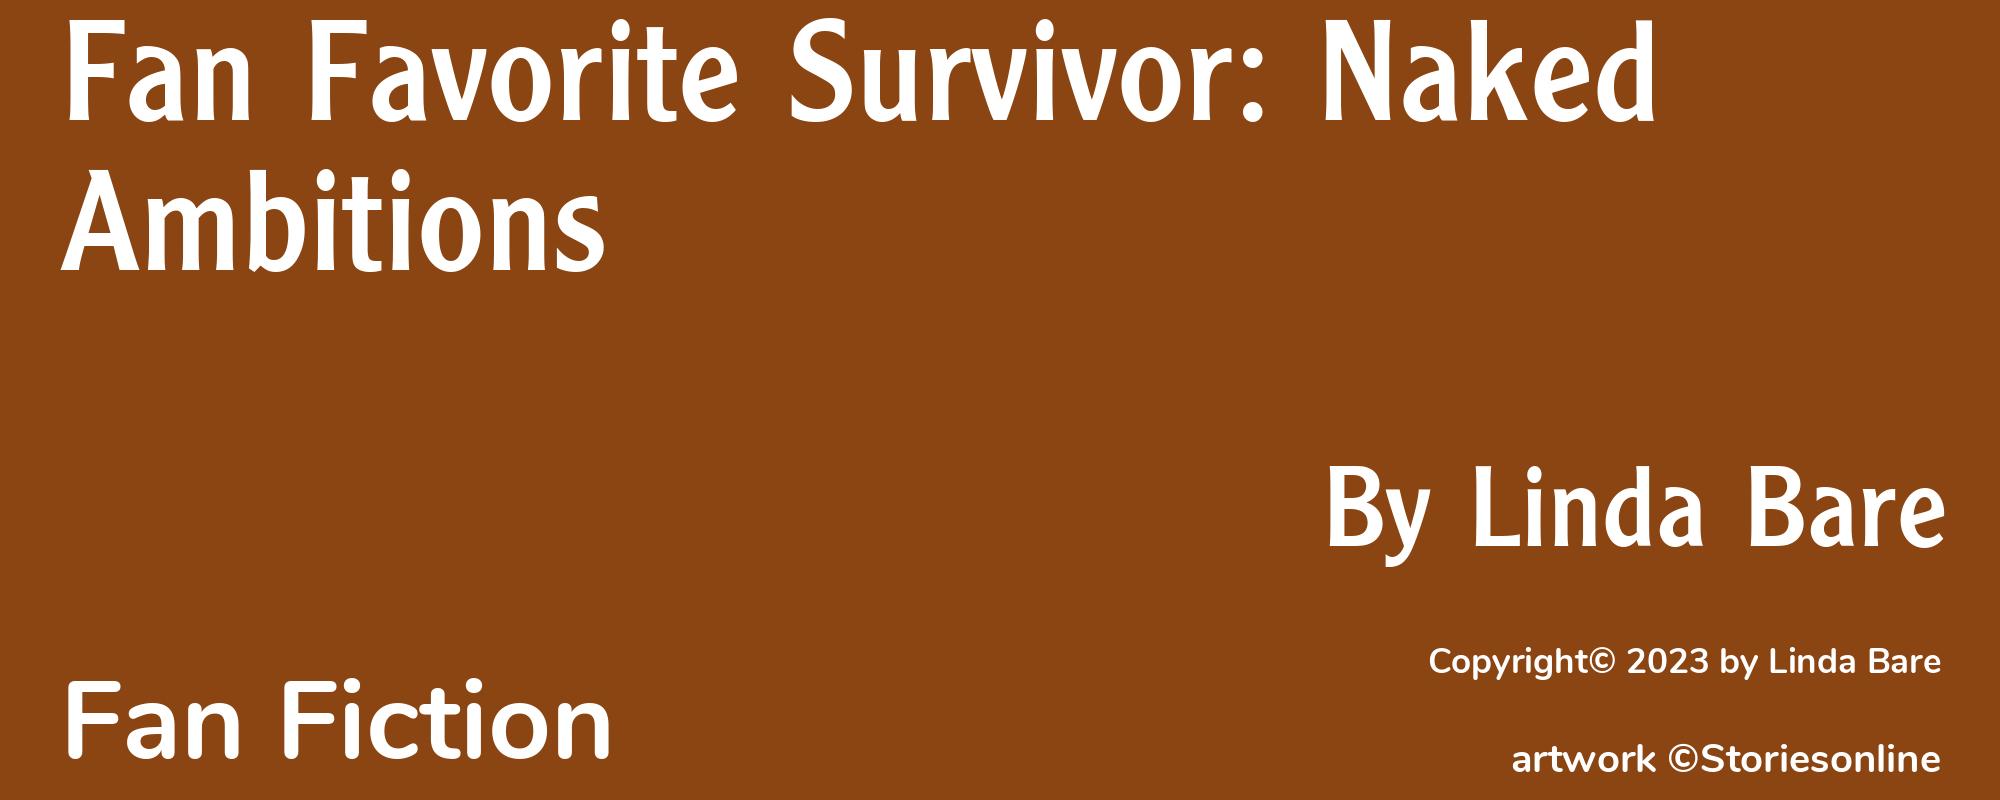 Fan Favorite Survivor: Naked Ambitions - Cover